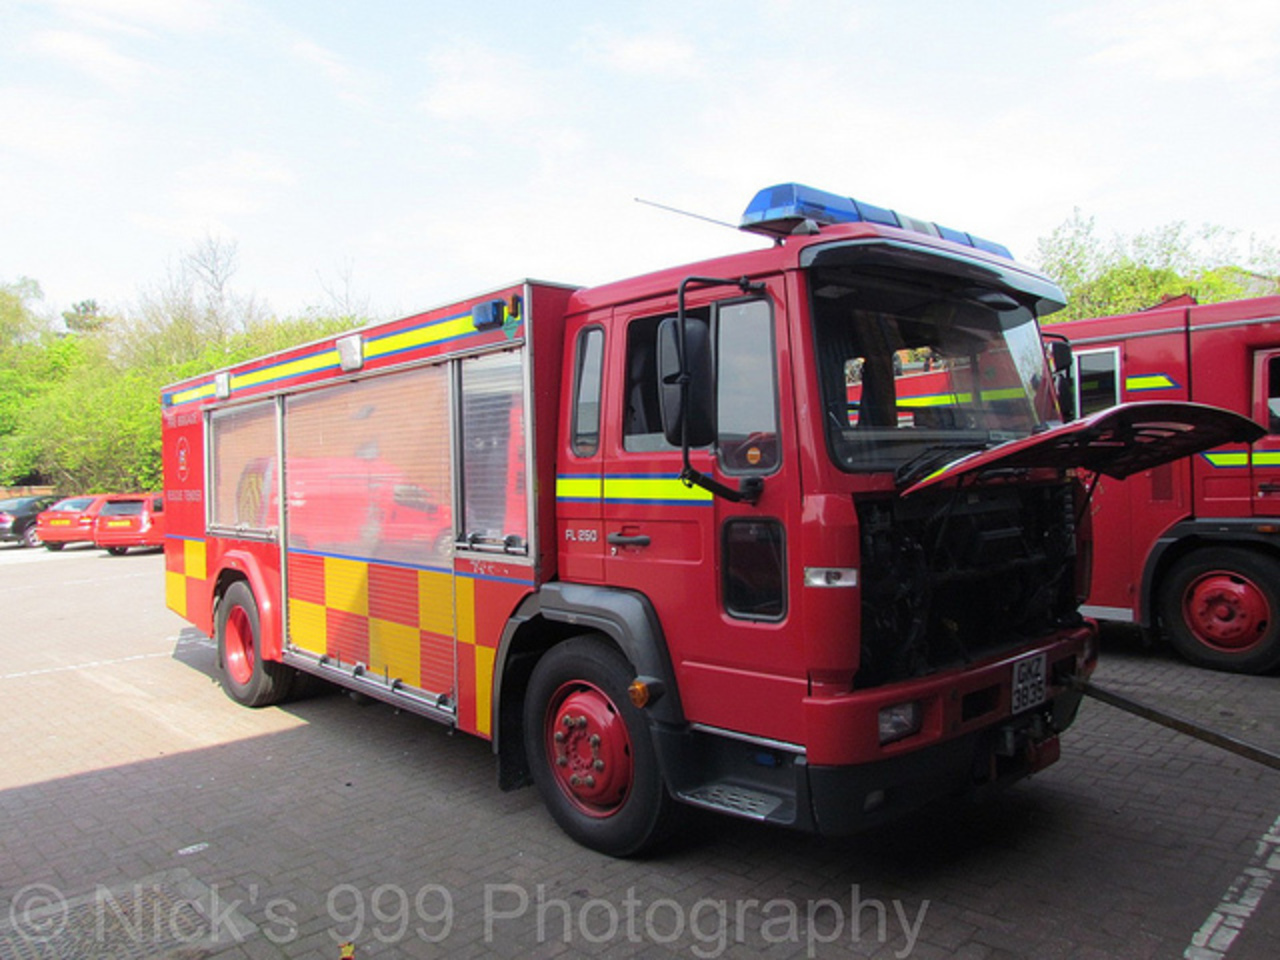 NIFRS / W1104 / GKZ 3835 / Volvo FL250 / Rescue Tender | Flickr ...